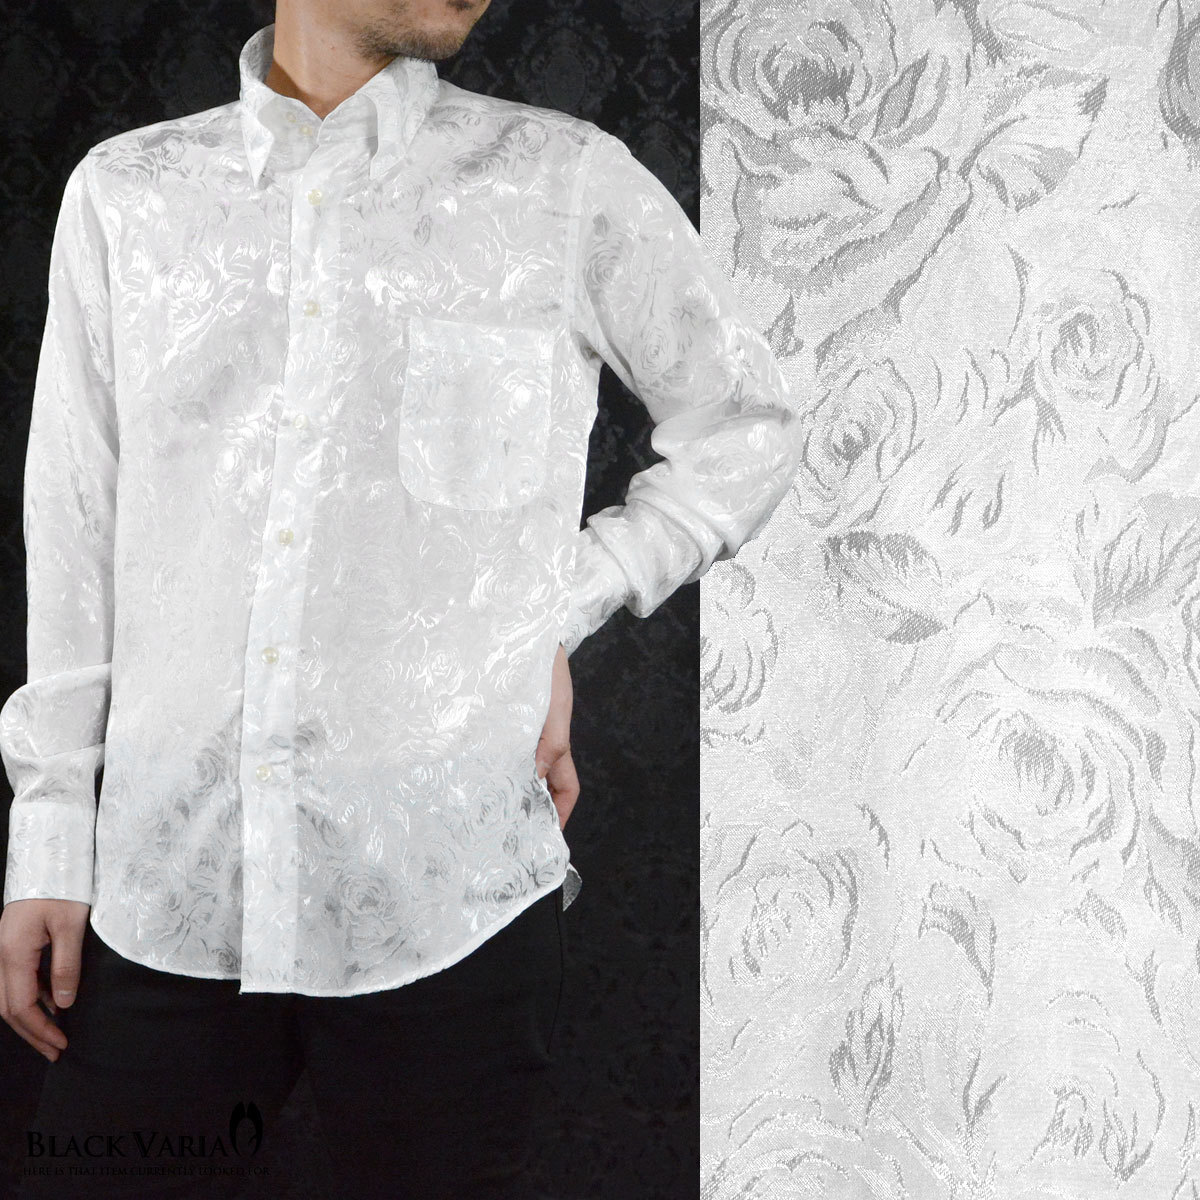 a161222-wh BlackVaria ドゥエボットーニ 花柄 薔薇 ジャガード レギュラーカラー サテン ドレスシャツ メンズ(ホワイト白) 3L パーティー_画像2